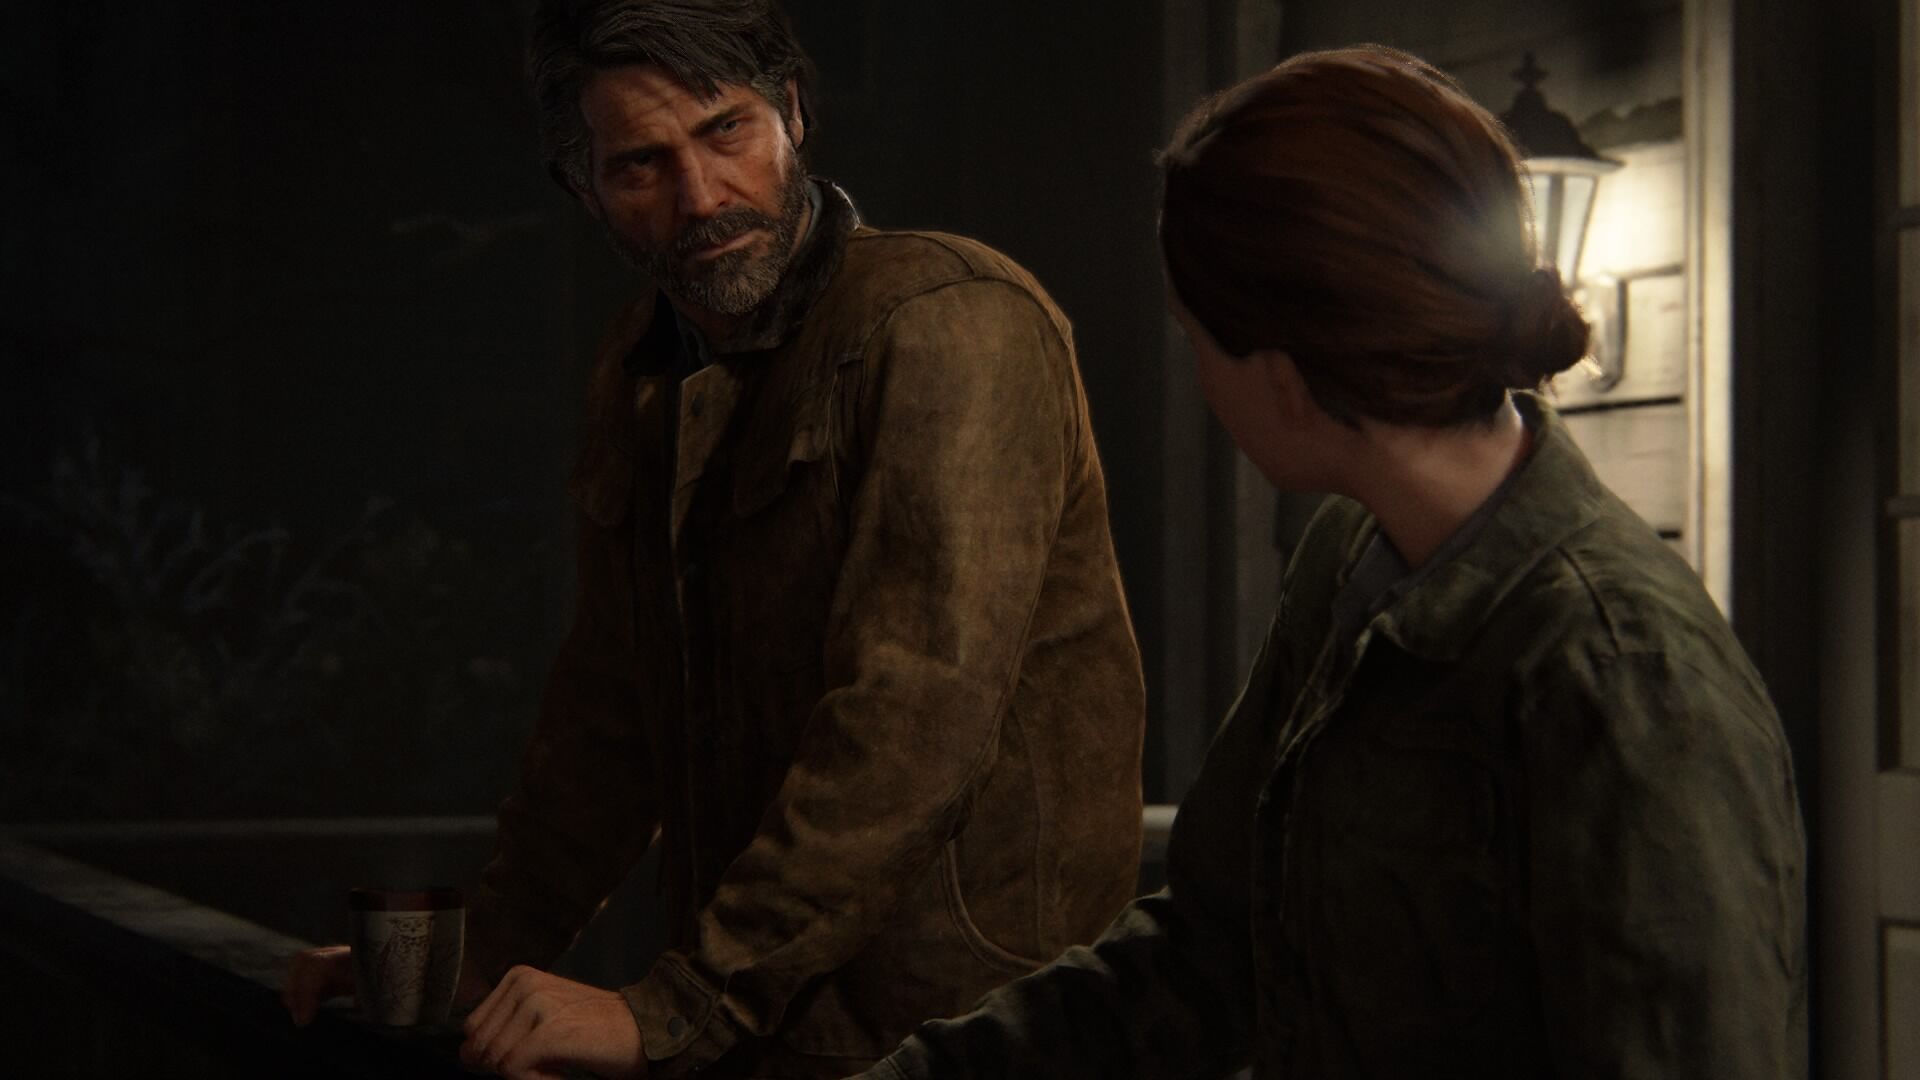 All Joel Scenes in The Last of Us Part 2 